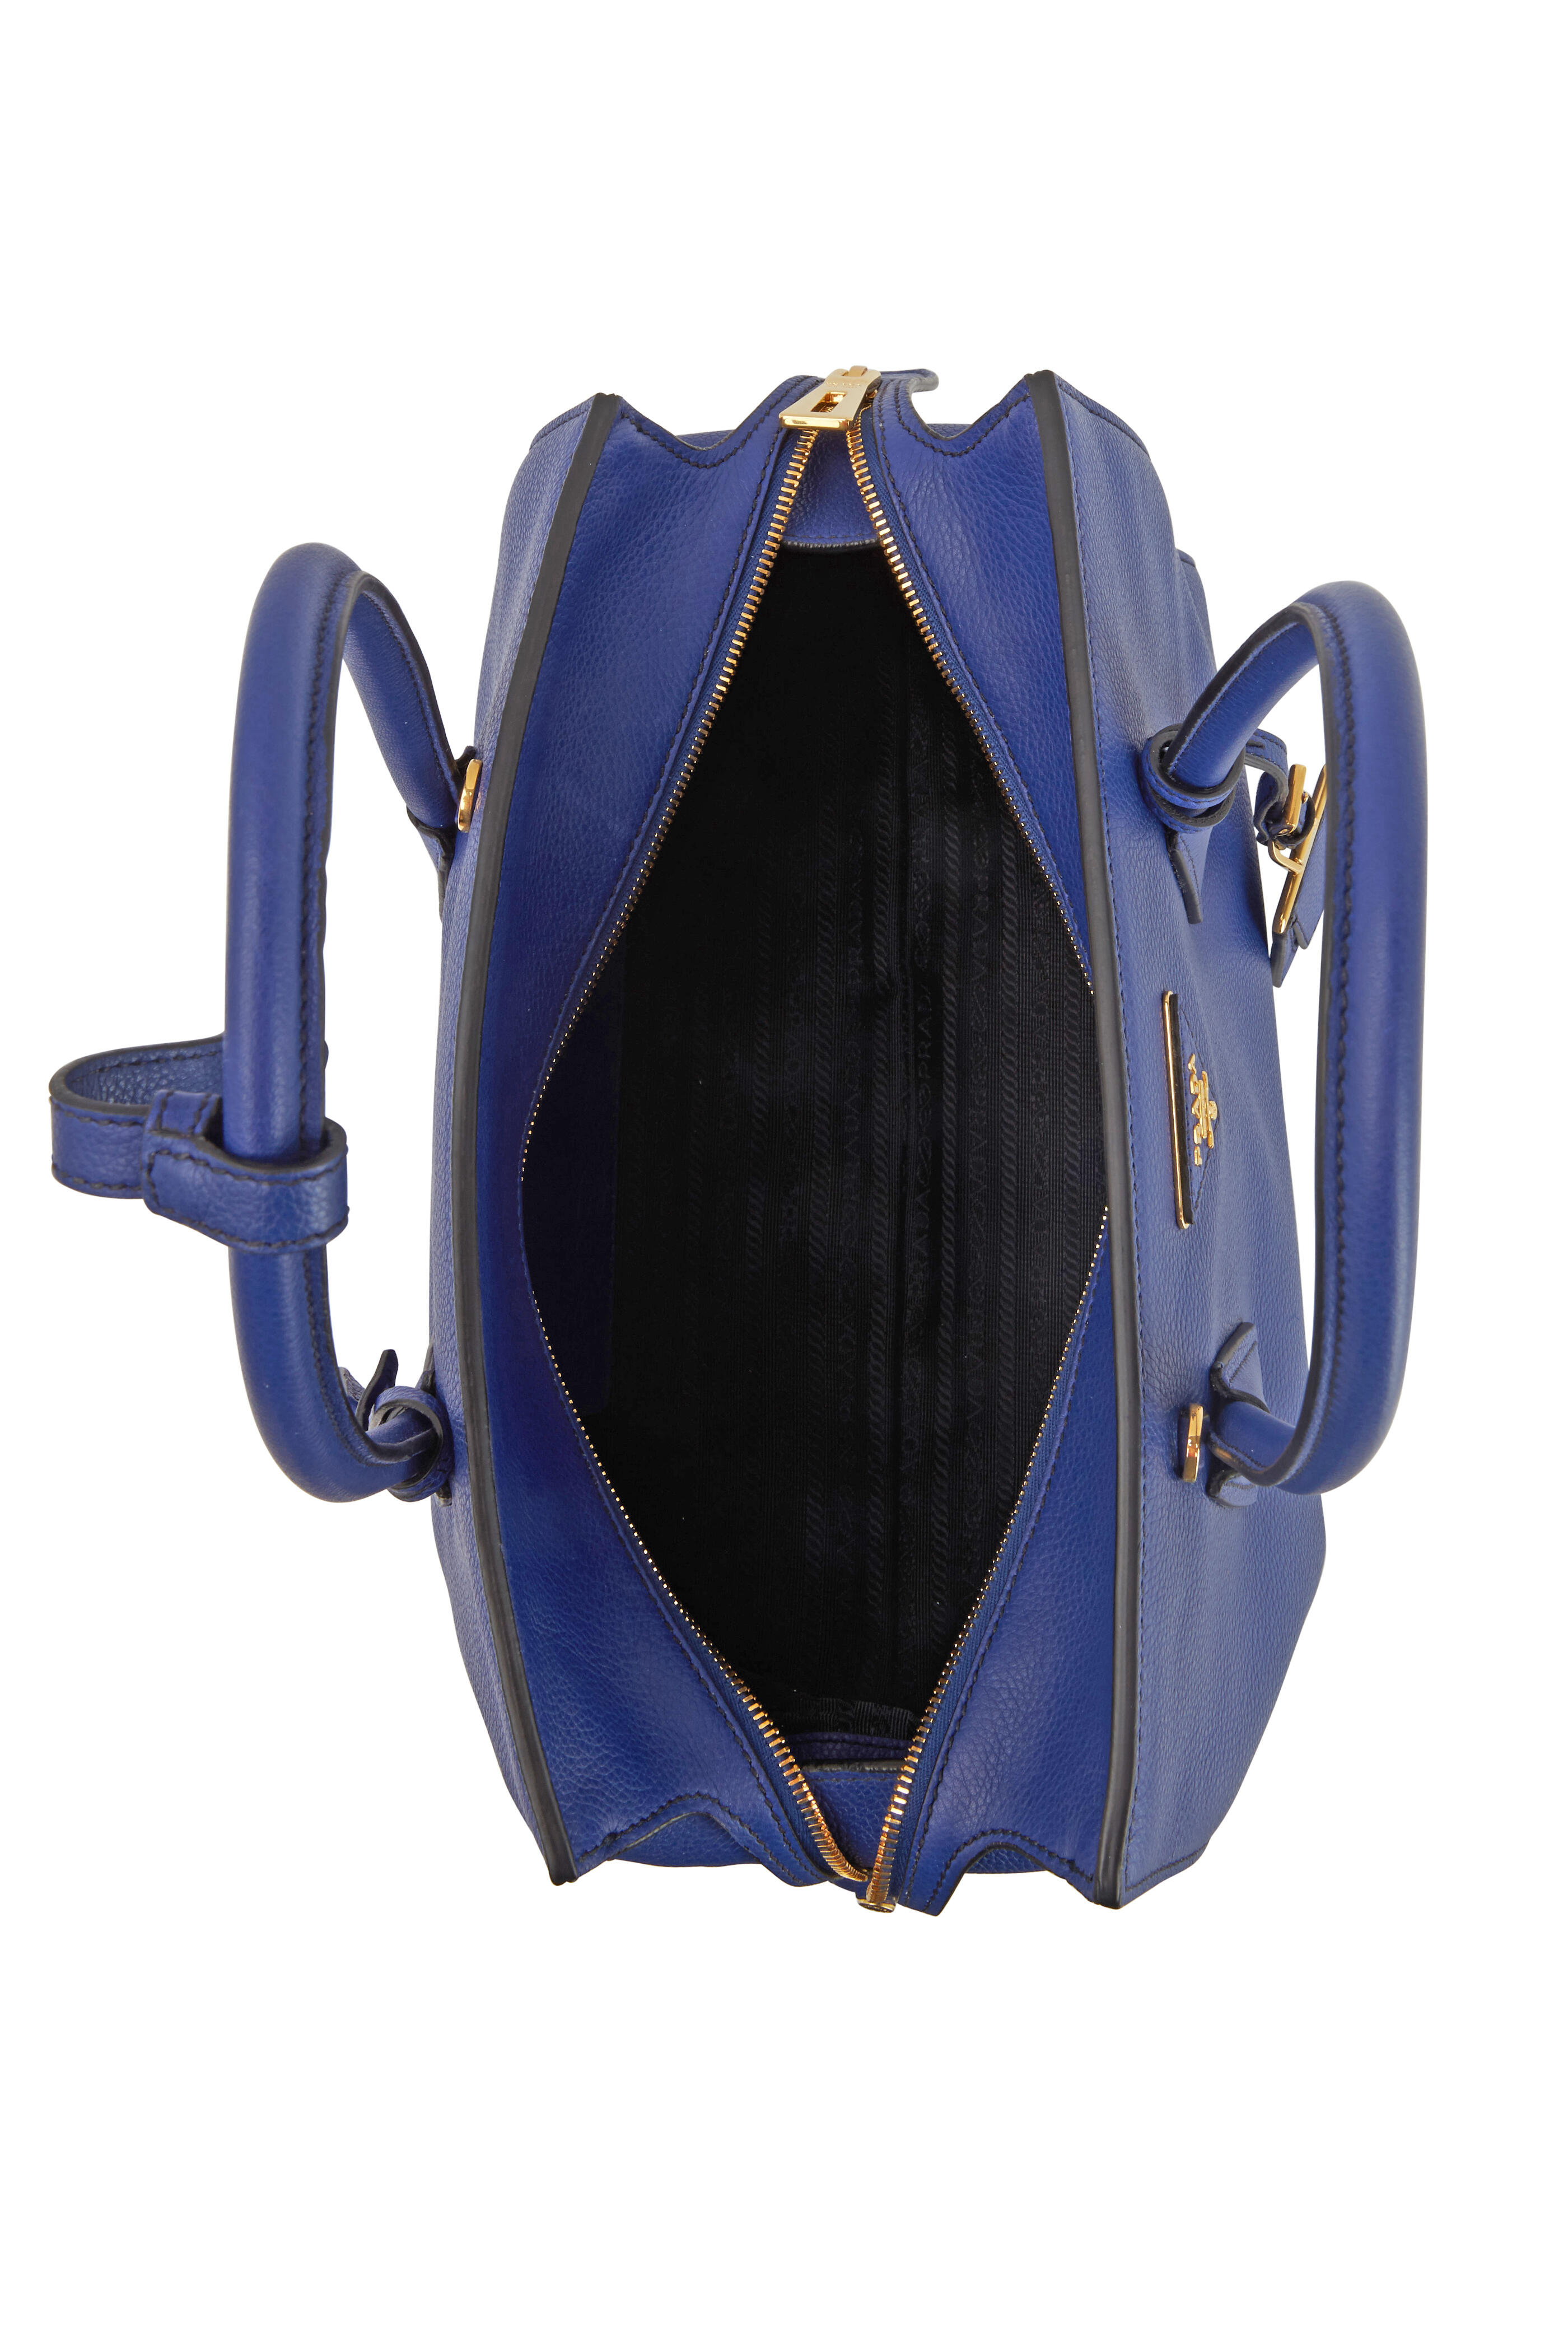 Prada - Vitello Dark Blue Grain Leather Satchel Bag